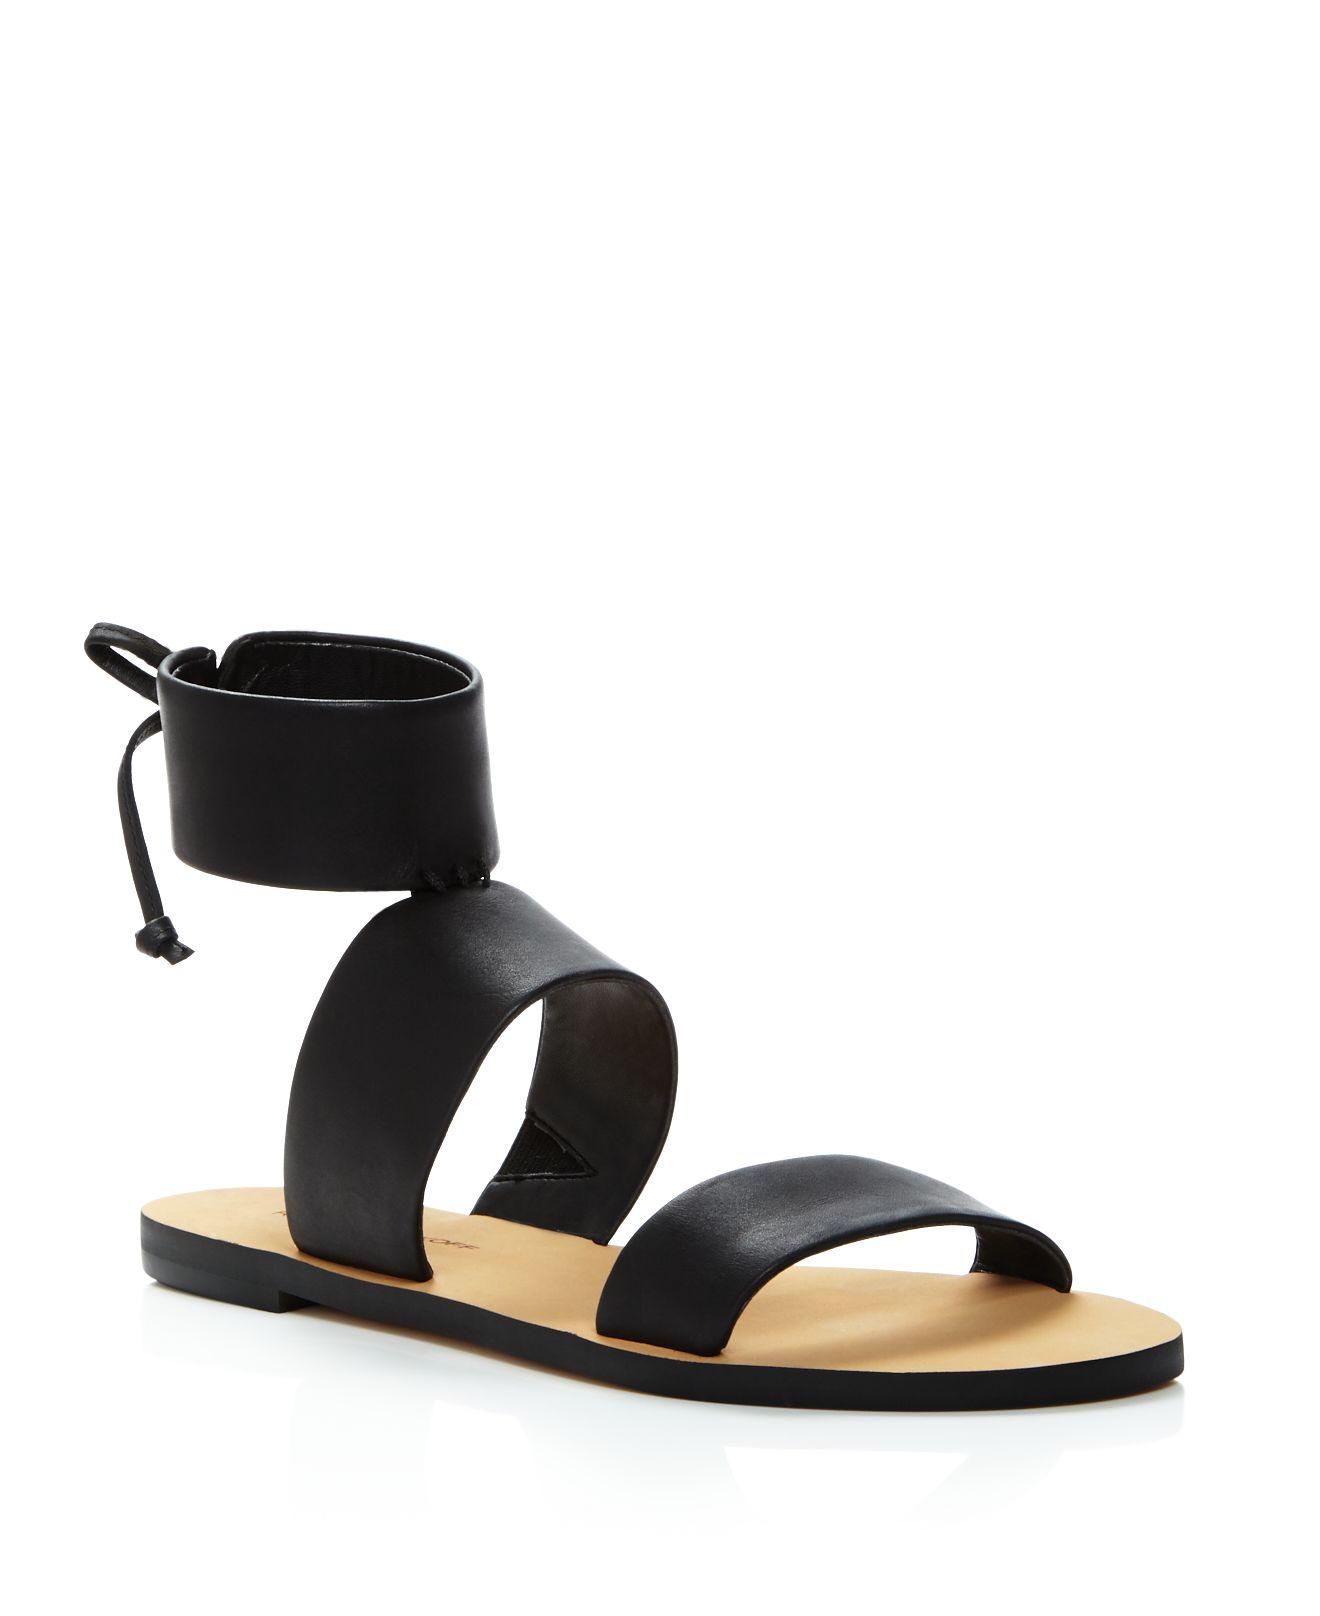 Lyst - Rebecca Minkoff Emma Ankle Strap Sandals in Black